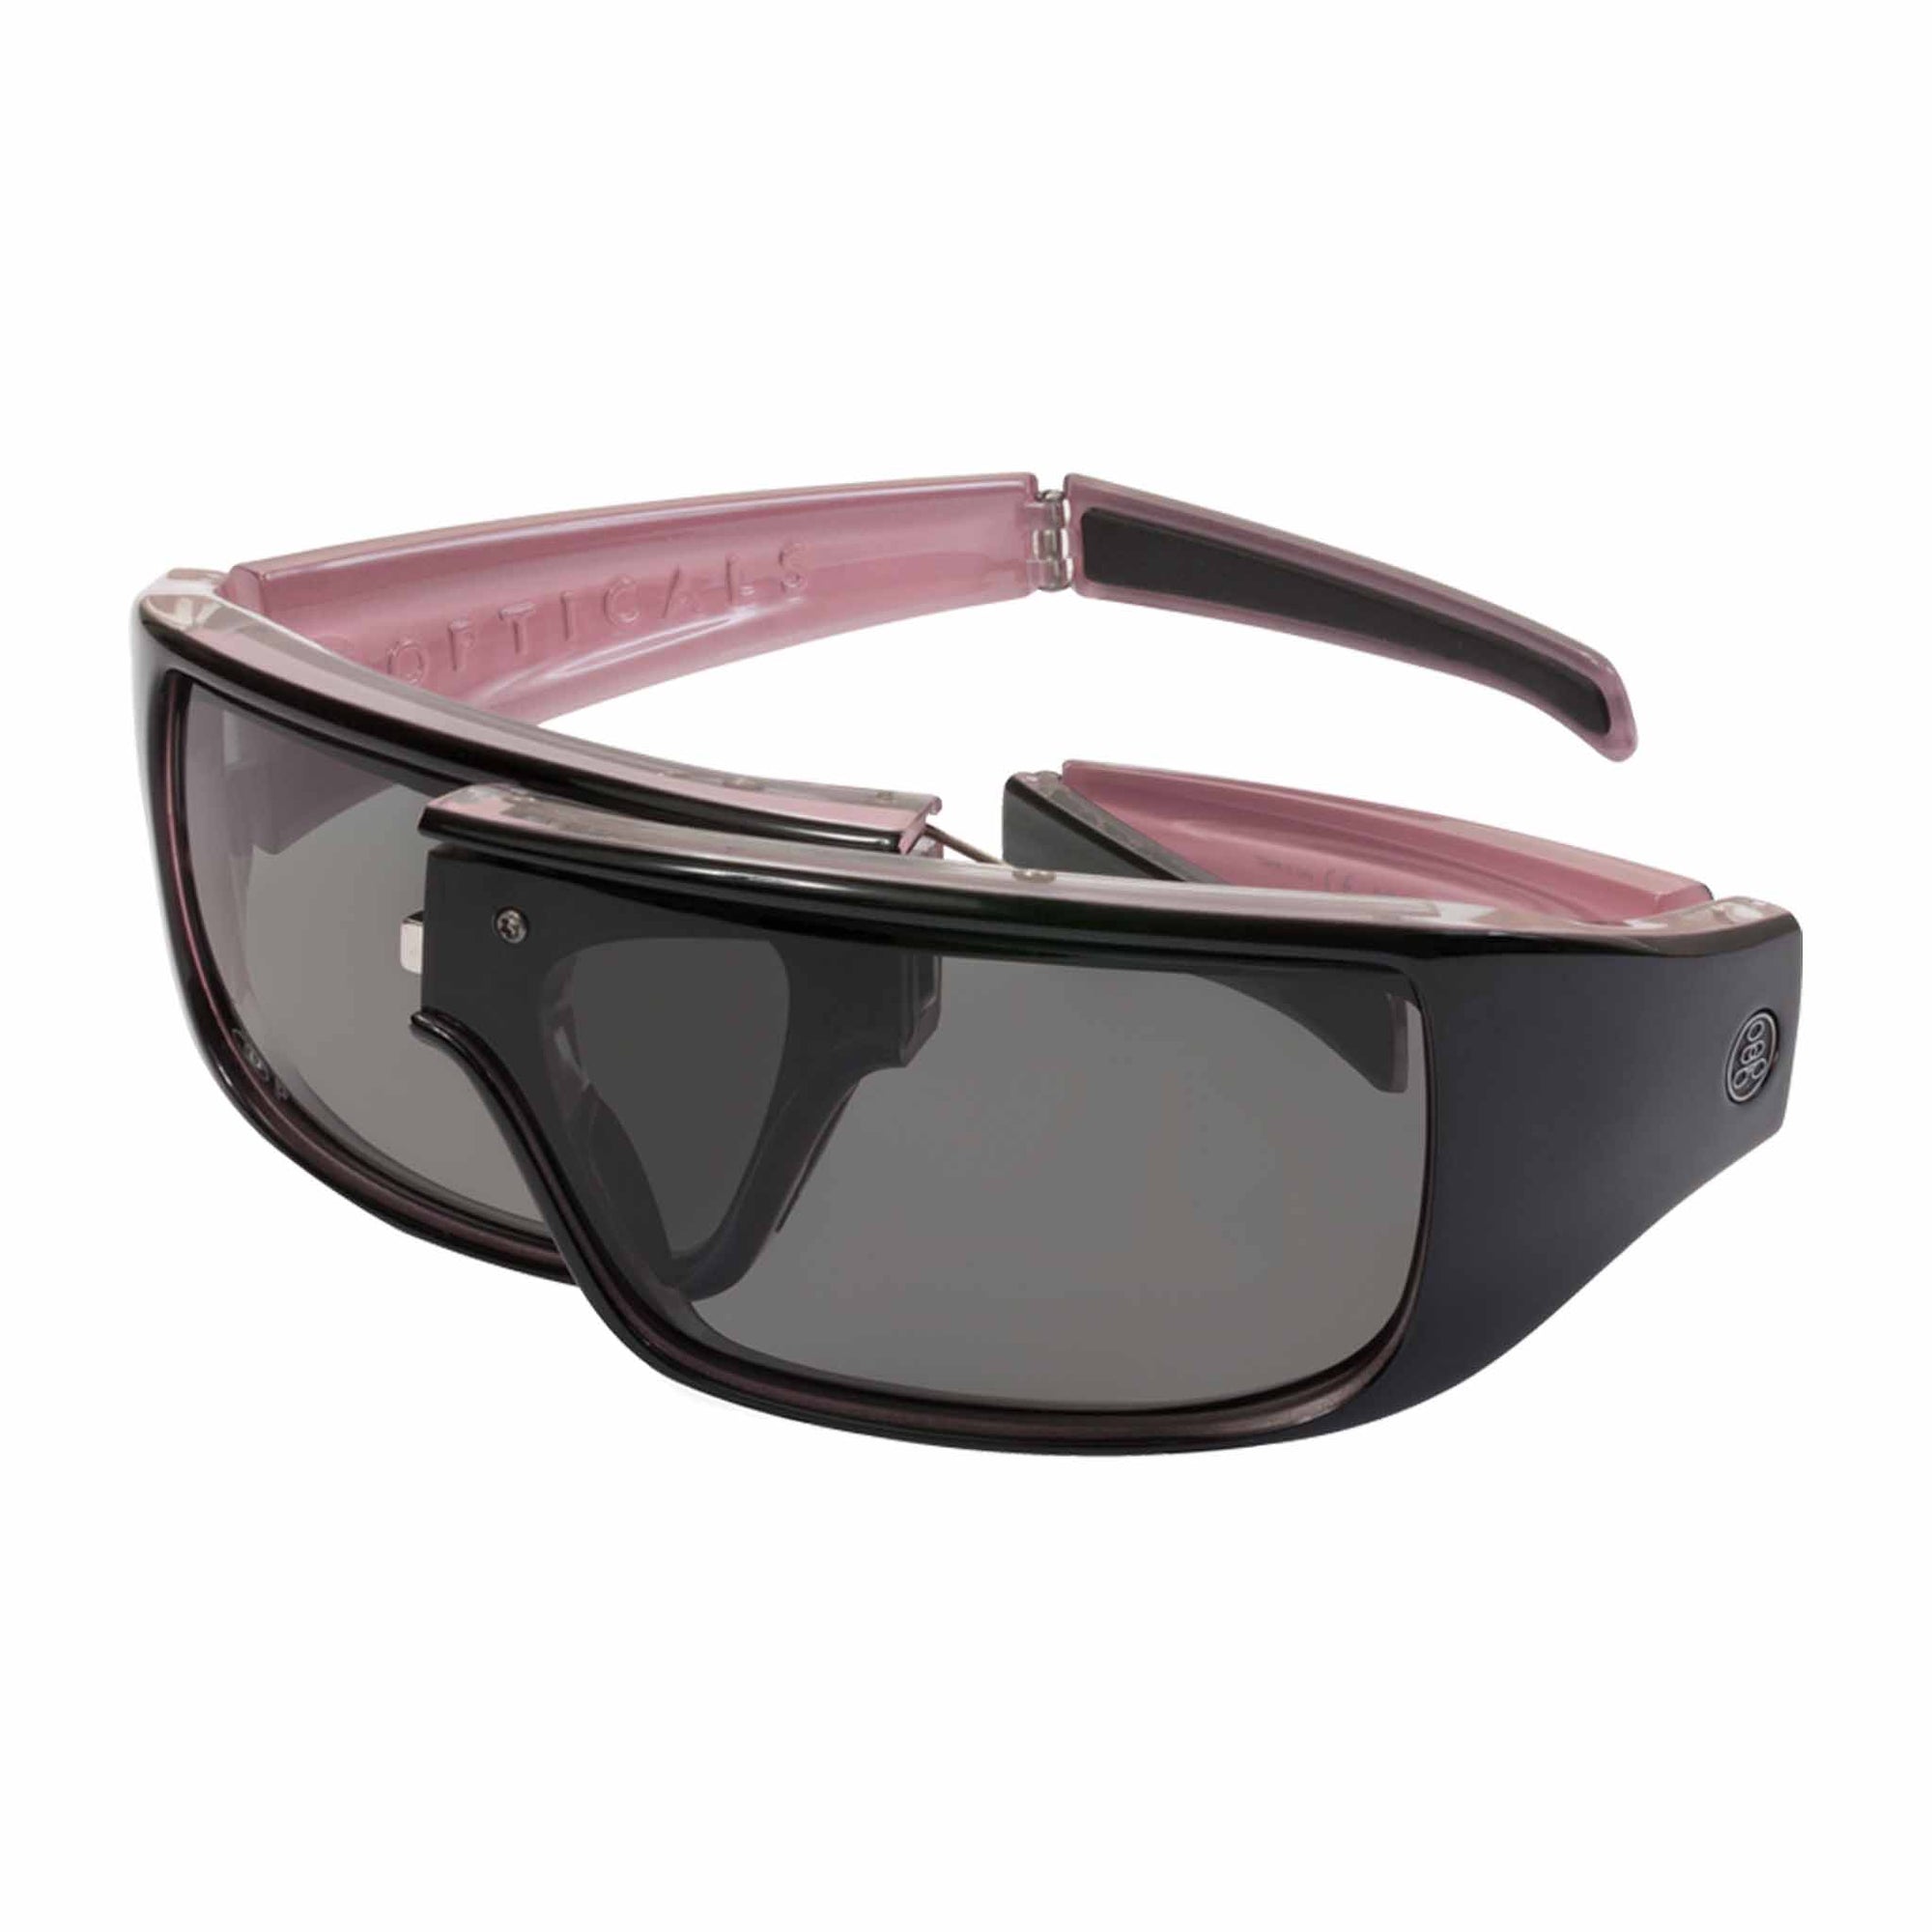 Popticals, Premium Compact Sunglasses, PopGear, 040051-KLGP, Polarized Sunglasses, Gloss Black over Pink Crystal Frame , Gray Lenses, Glam View